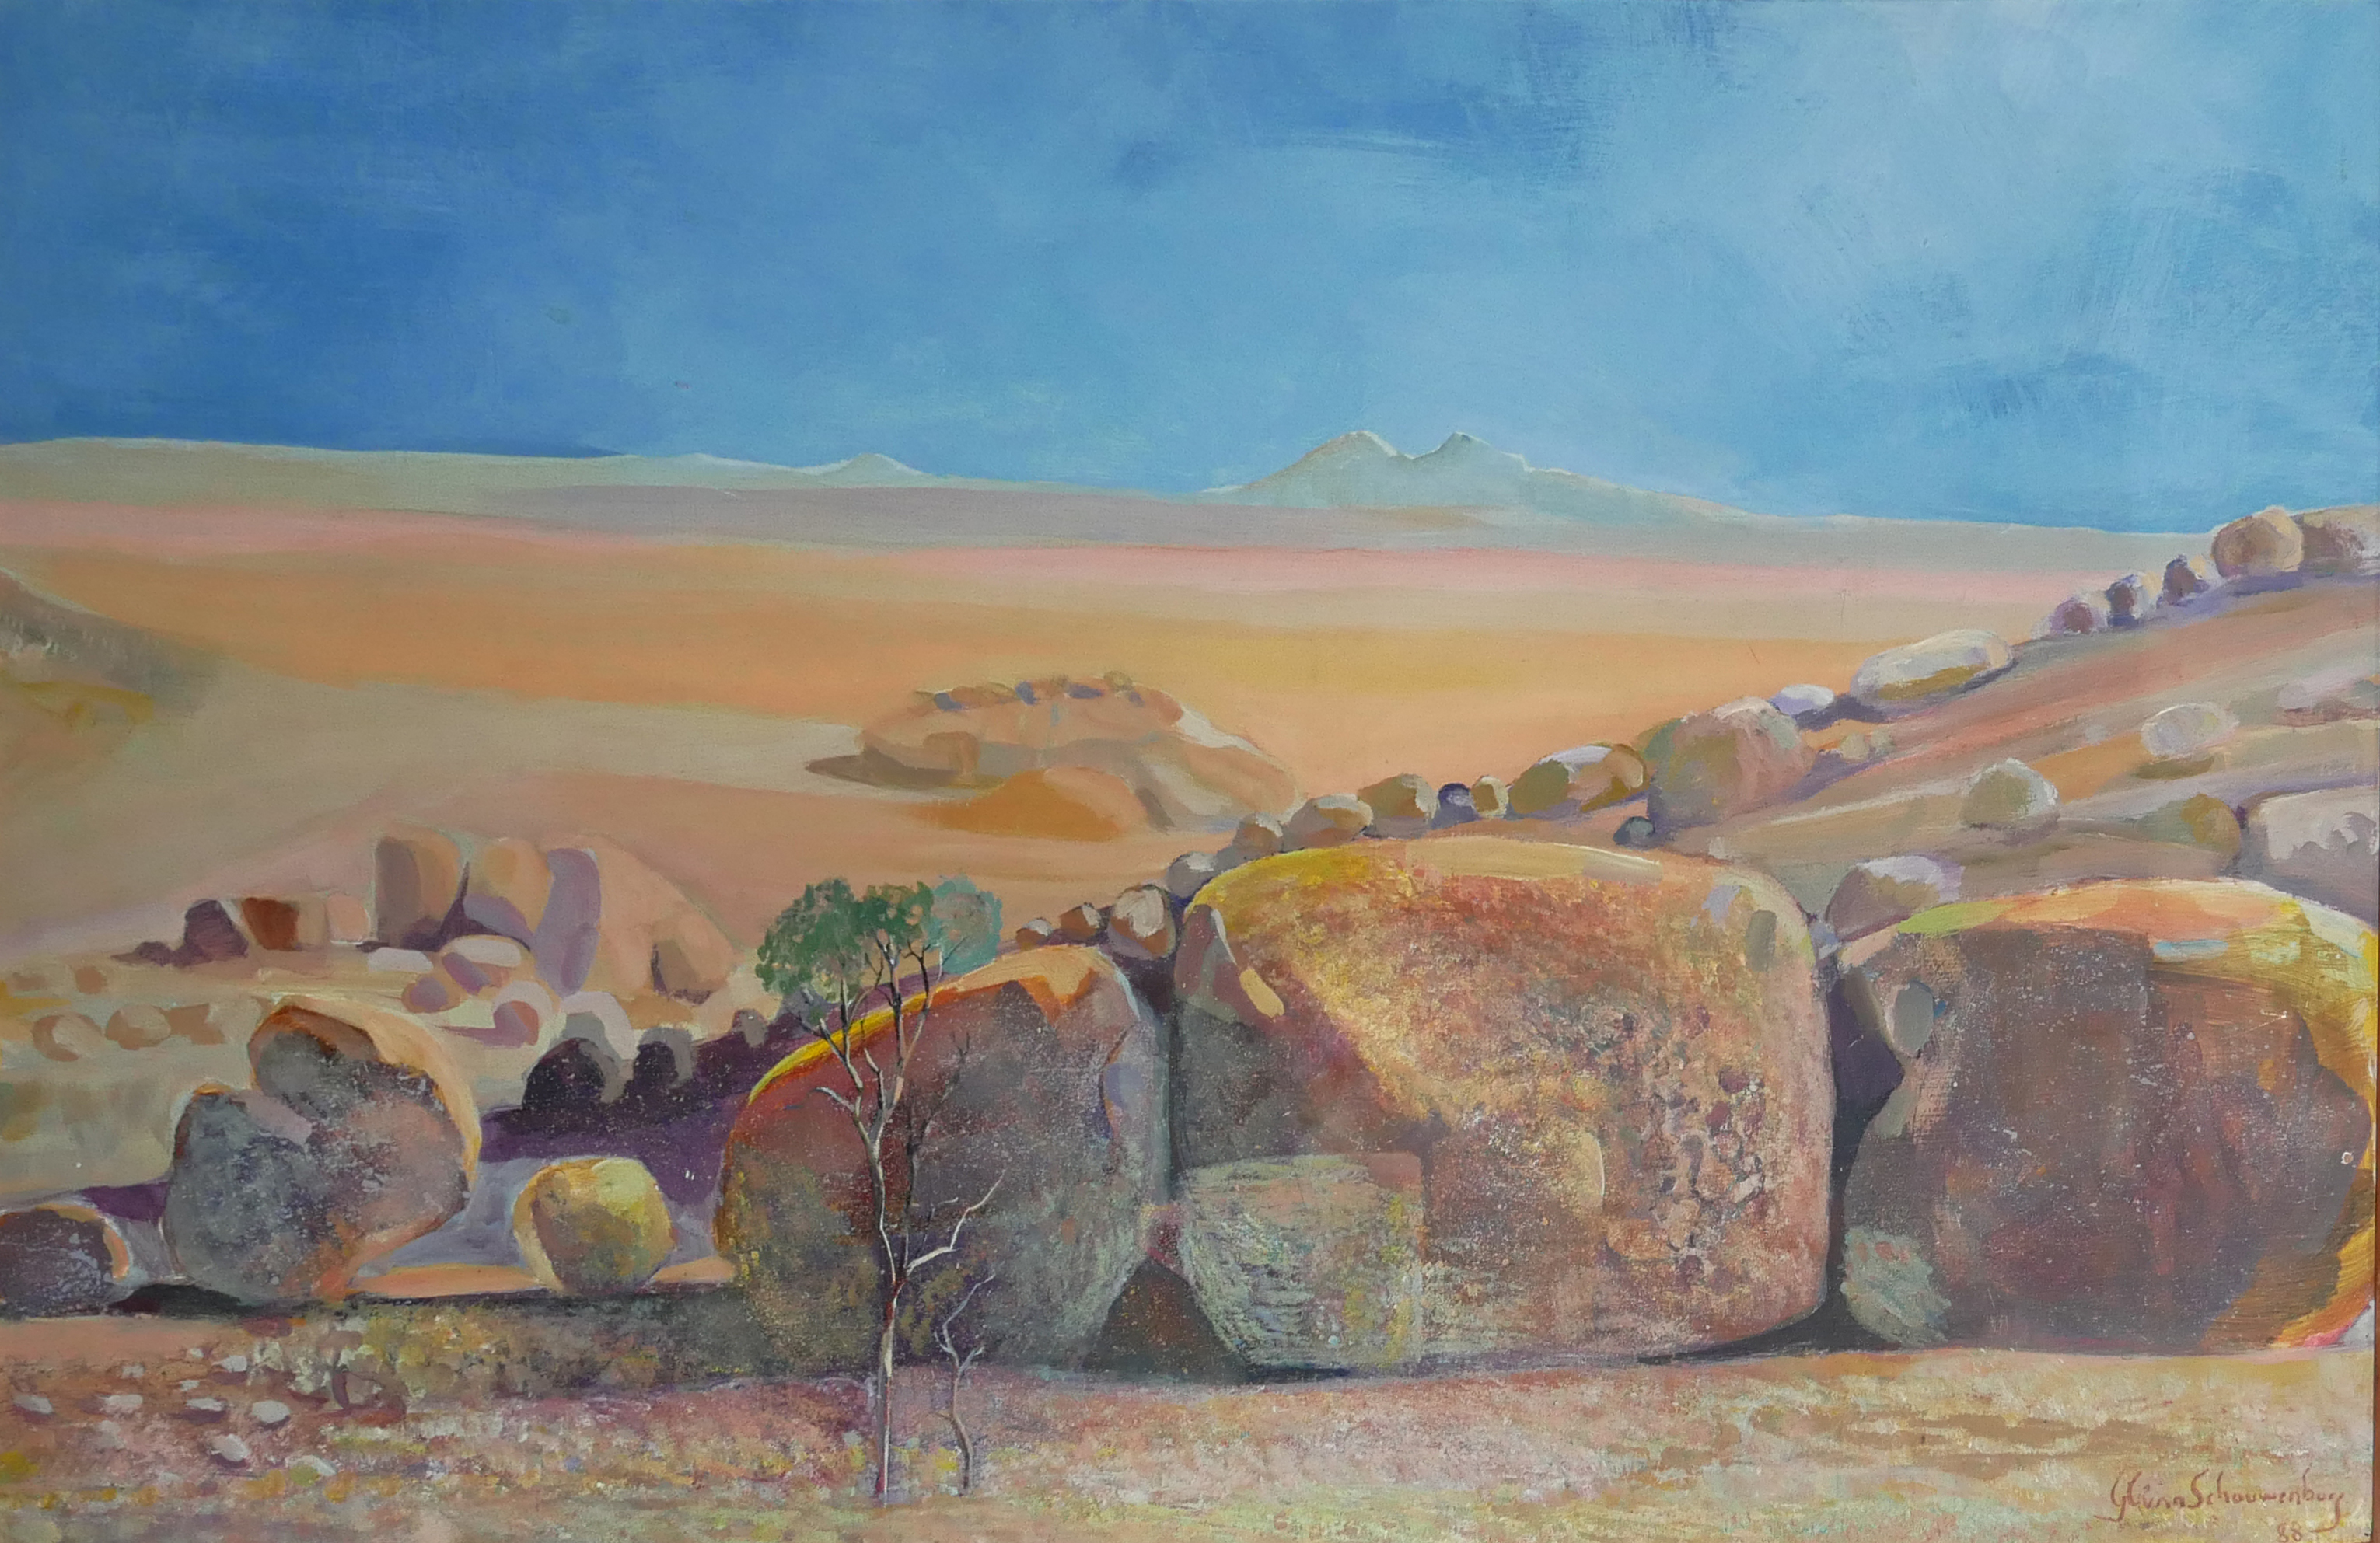 GERRIT VAN SCOUWENBURG, NAMIBIA, A 20TH CENTURY OIL ON BOARD Landscape, dessert scene, with